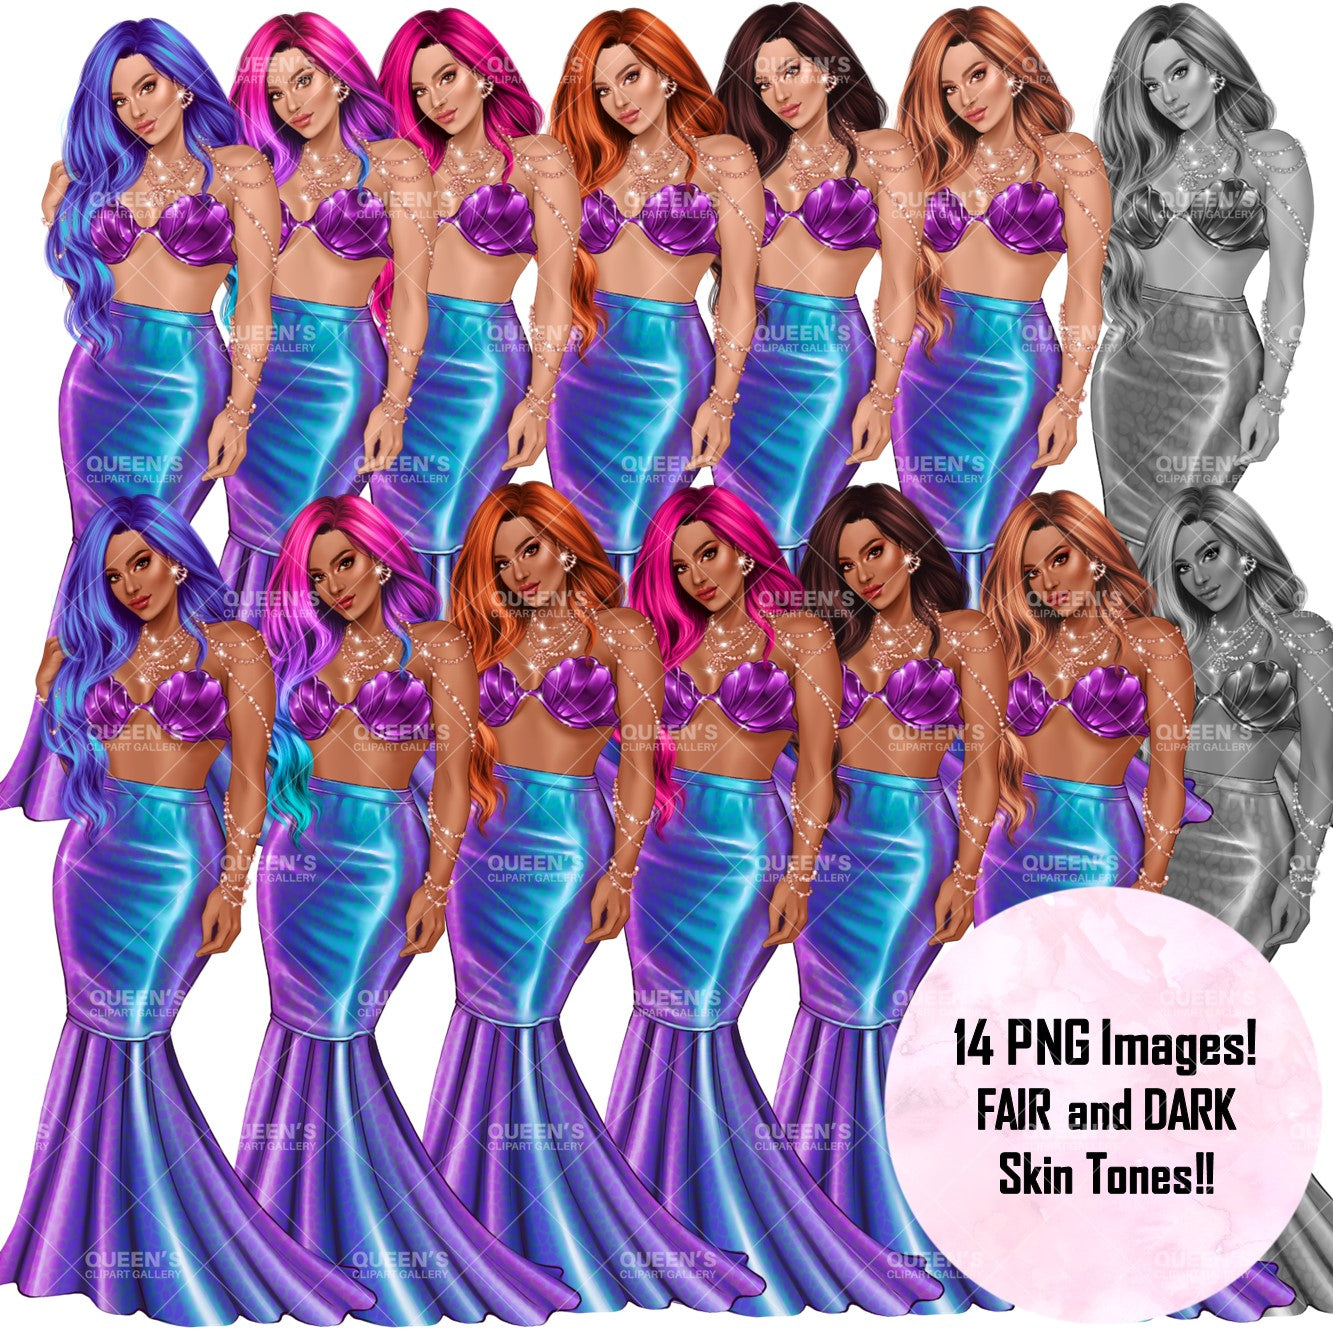 Mermaid clipart, Woman mermaid, Woman aquatic creature, Mermaid tail, Mermaid PNG, Goddess female mermaid, Fashion illustration, Curvy girl